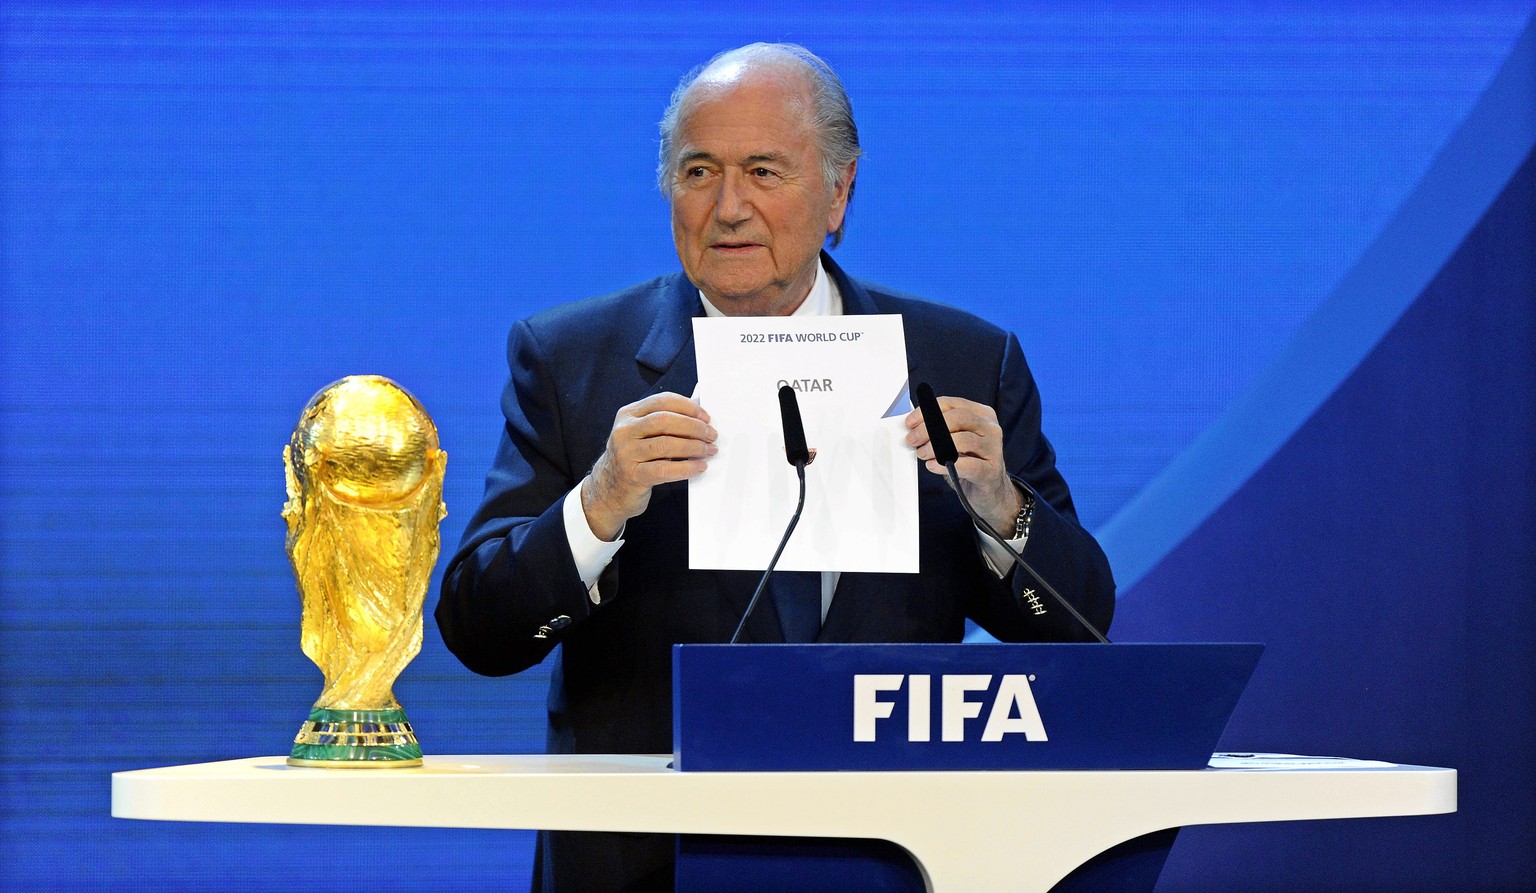 epa07655093 (FILE) - FIFA president Joseph S. Blatter announces that Qatar will be hosting the 2022 Soccer World Cup during the FIFA 2018 and 2022 World Cup Bid Announcement in Zurich, Switzerland, 02 ...